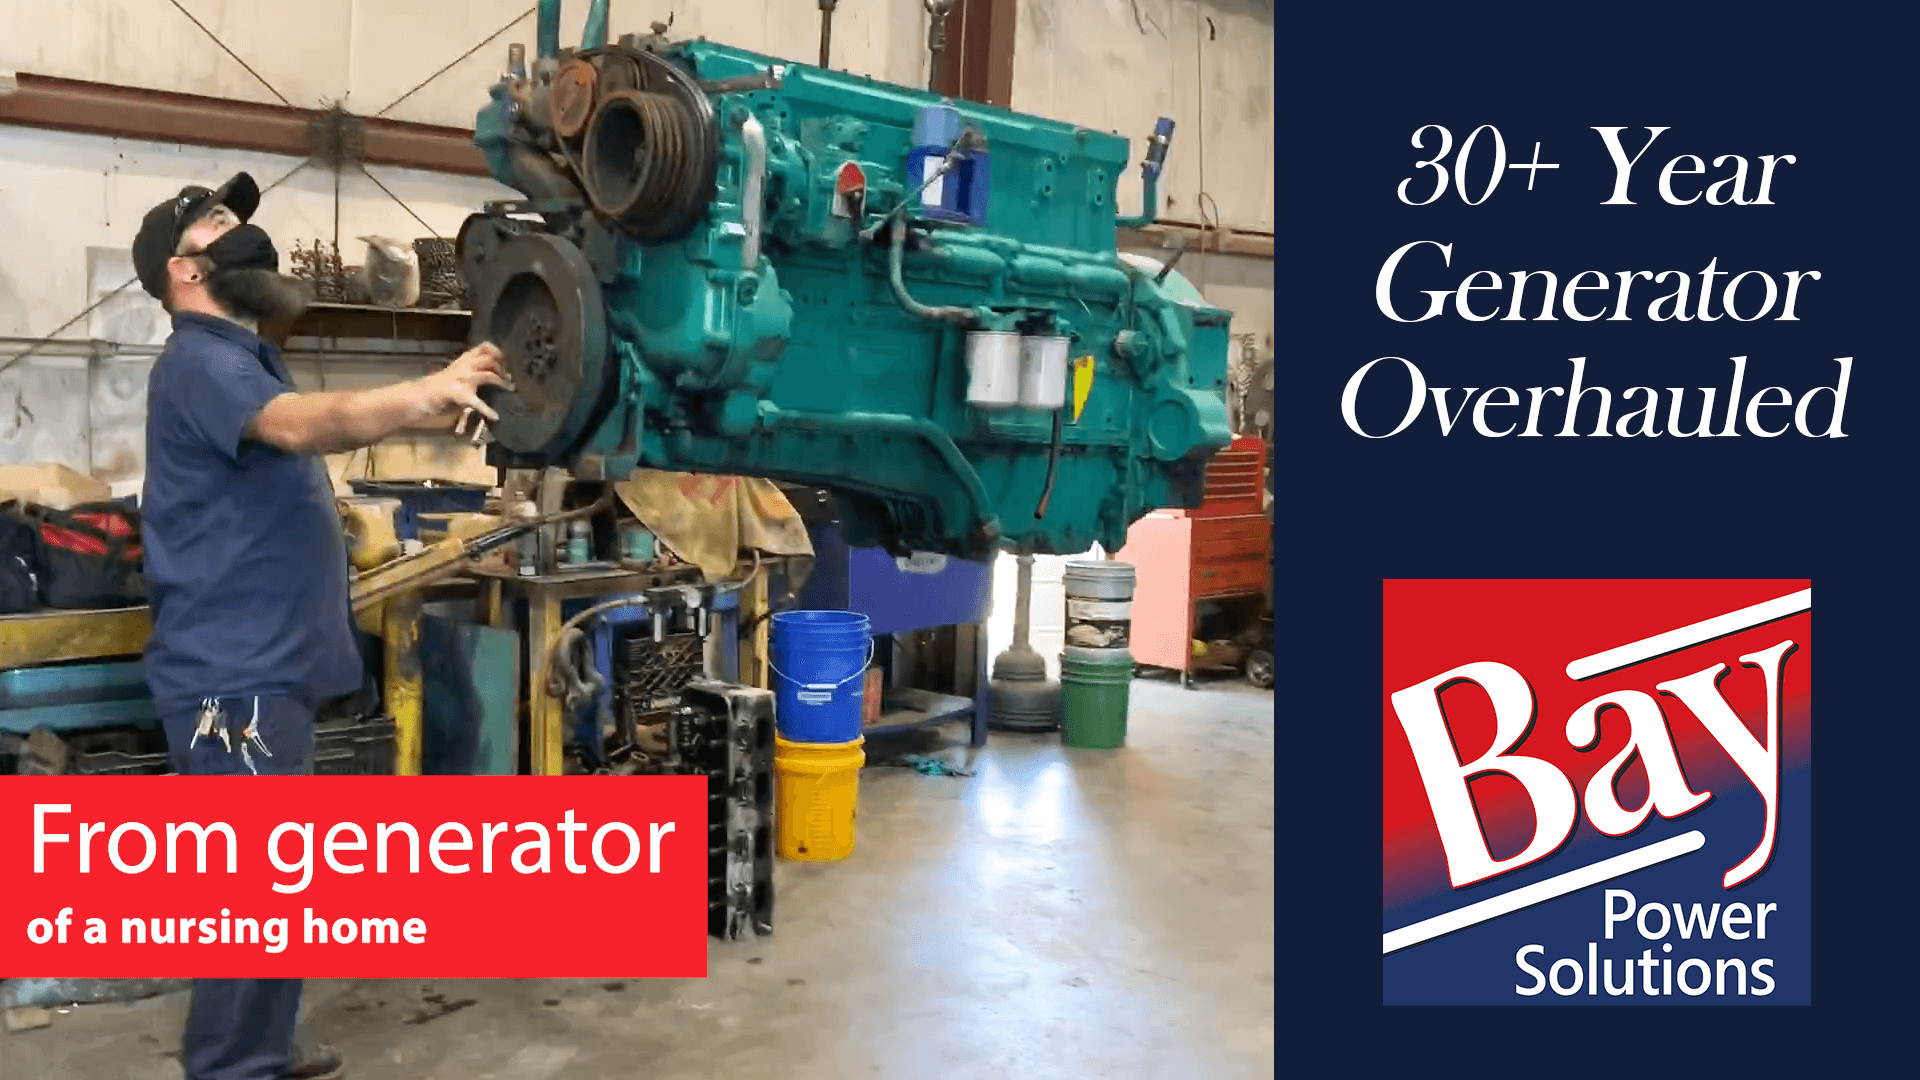 Service: 30+ Year Old Generator Overhauled